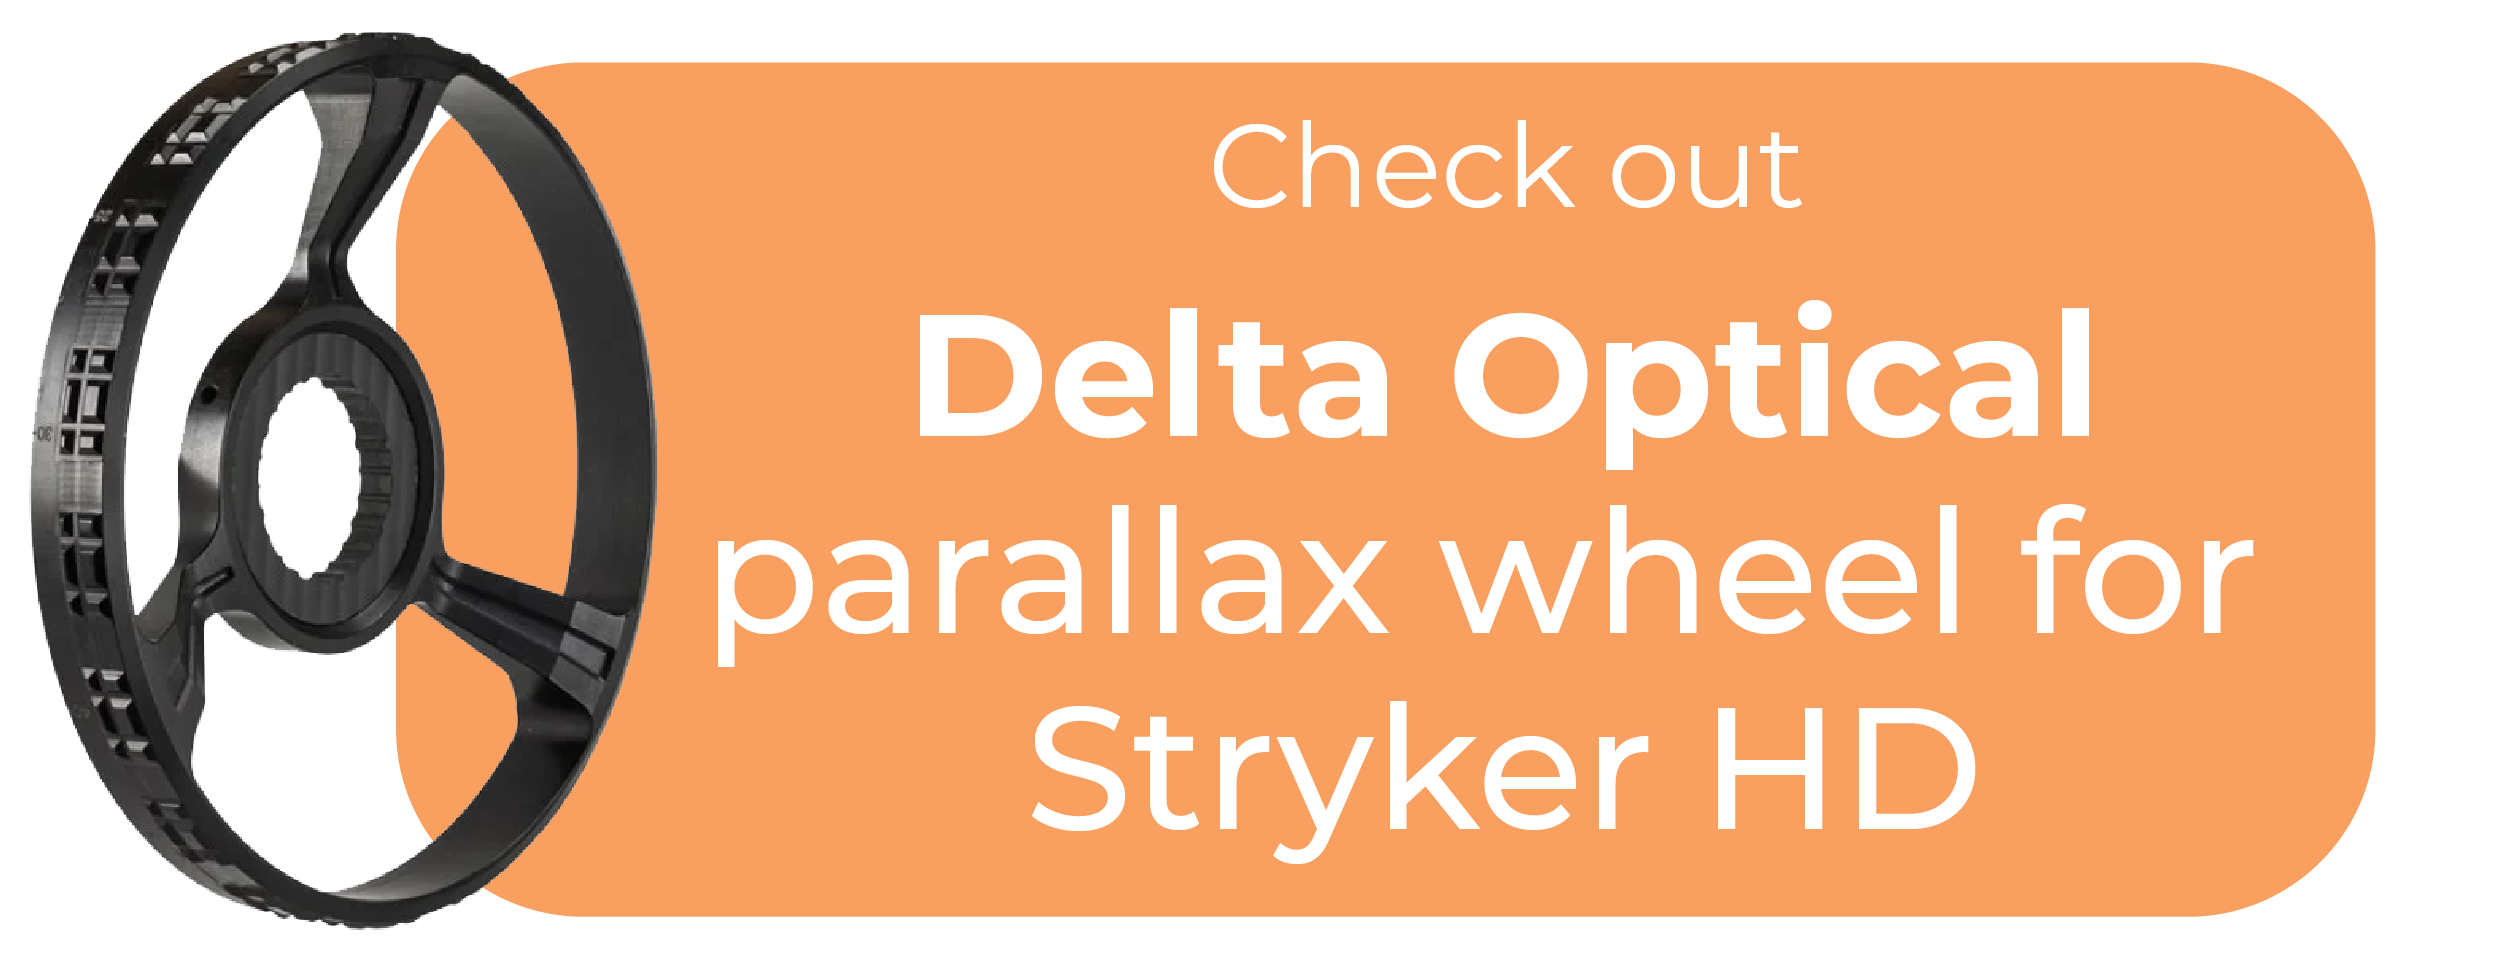 Delta Optical parallax wheel for Stryker HD - cta